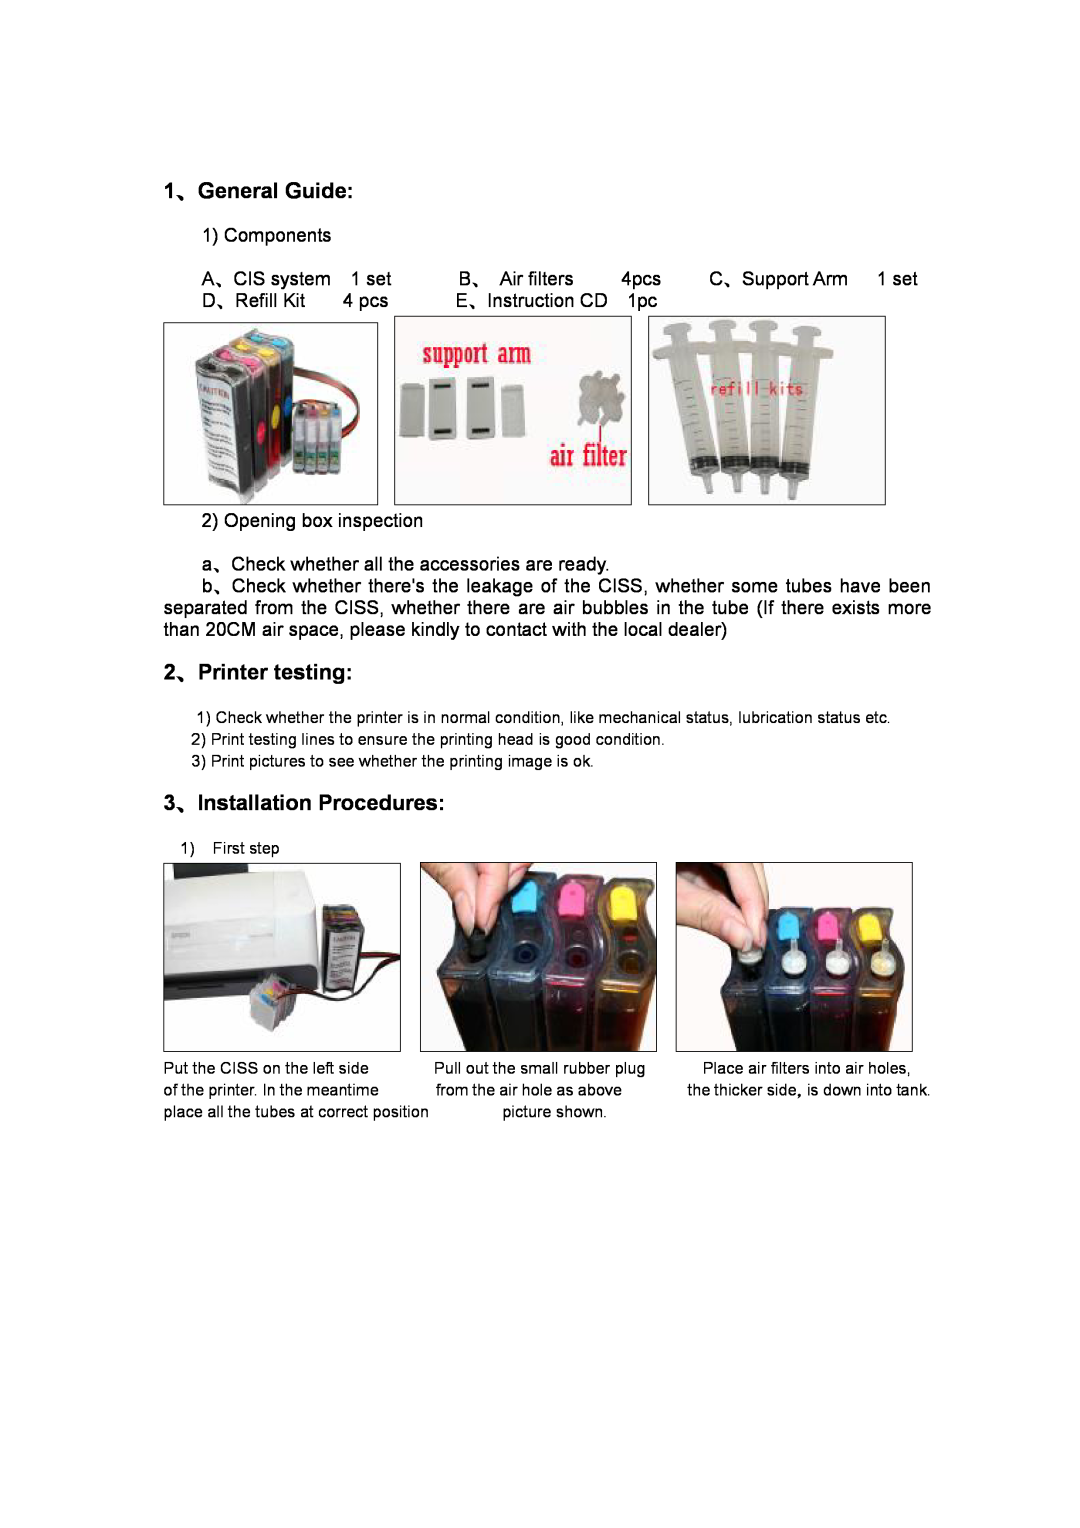 Epson c58 manual 1、General Guide, 2、Printer testing, 3、Installation Procedures 